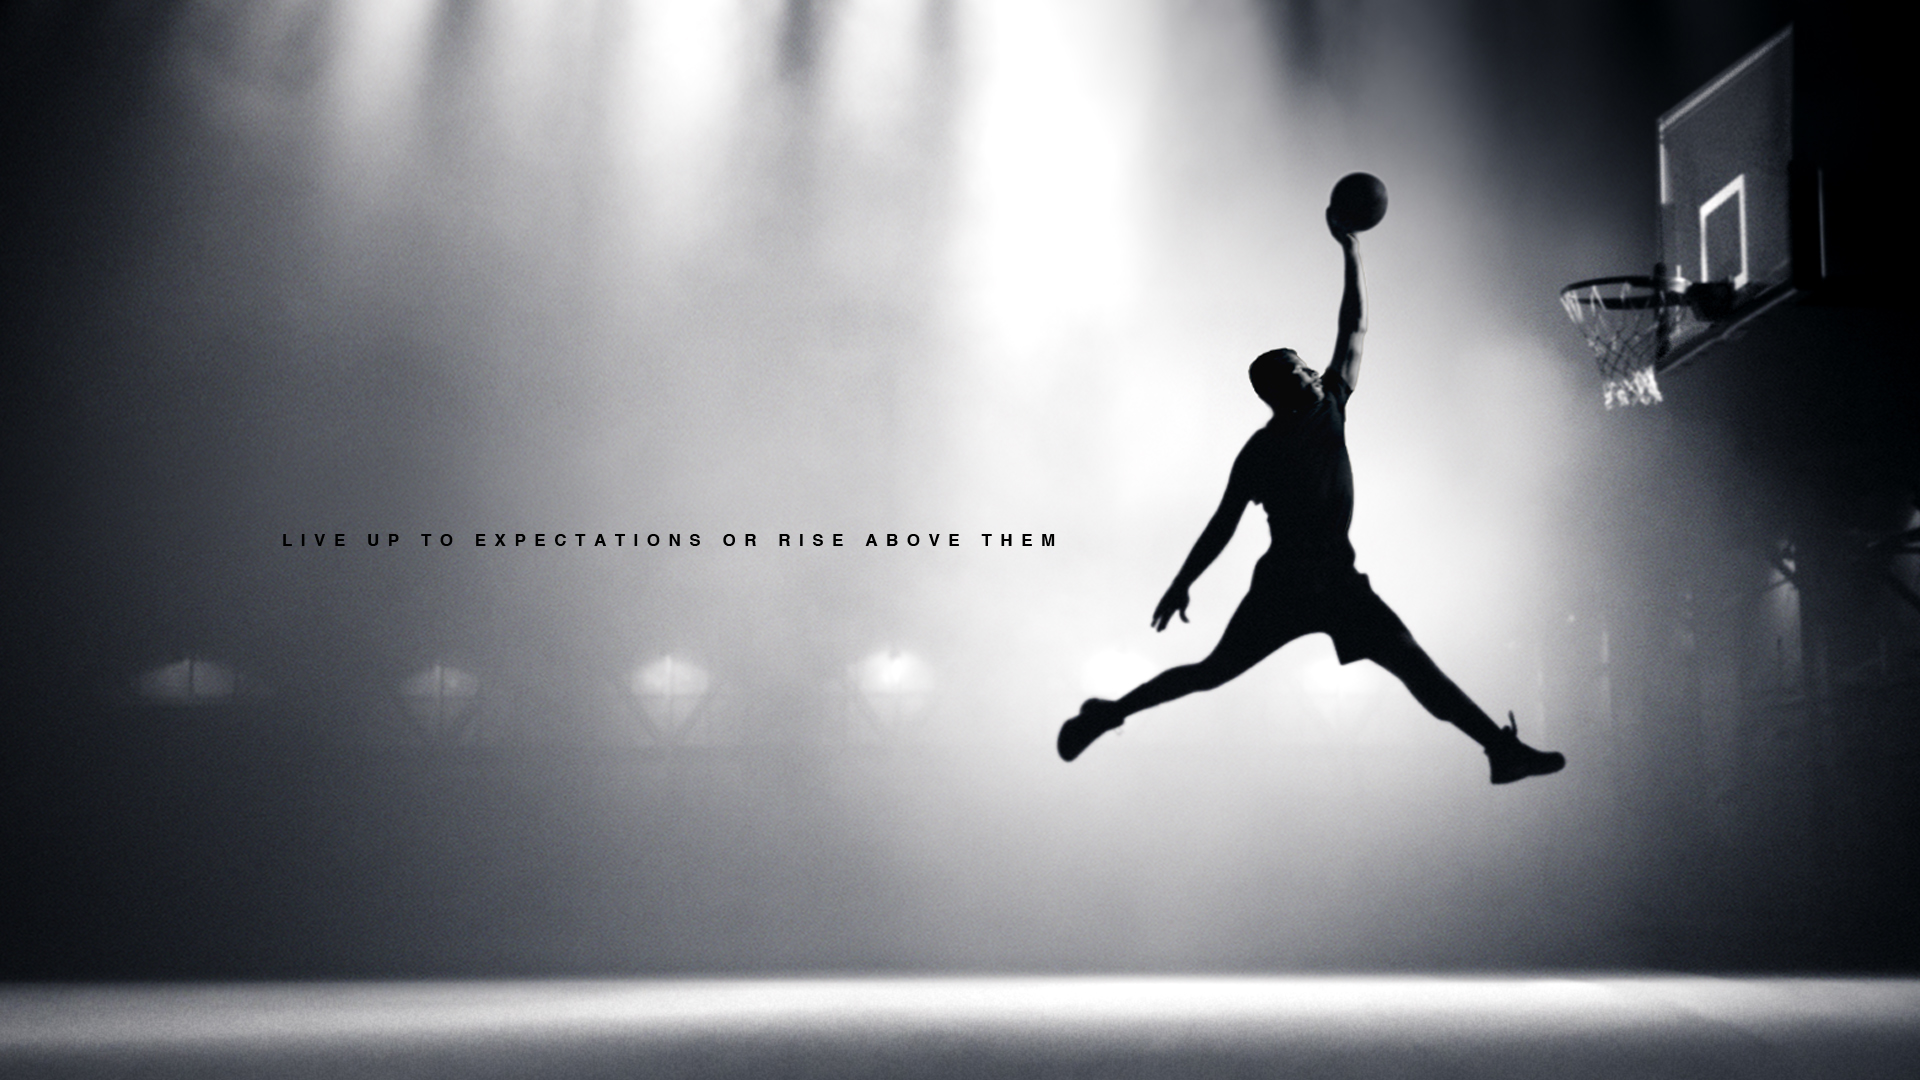 Wallpaper NBA Basketball slam dunk images for desktop section спорт   download